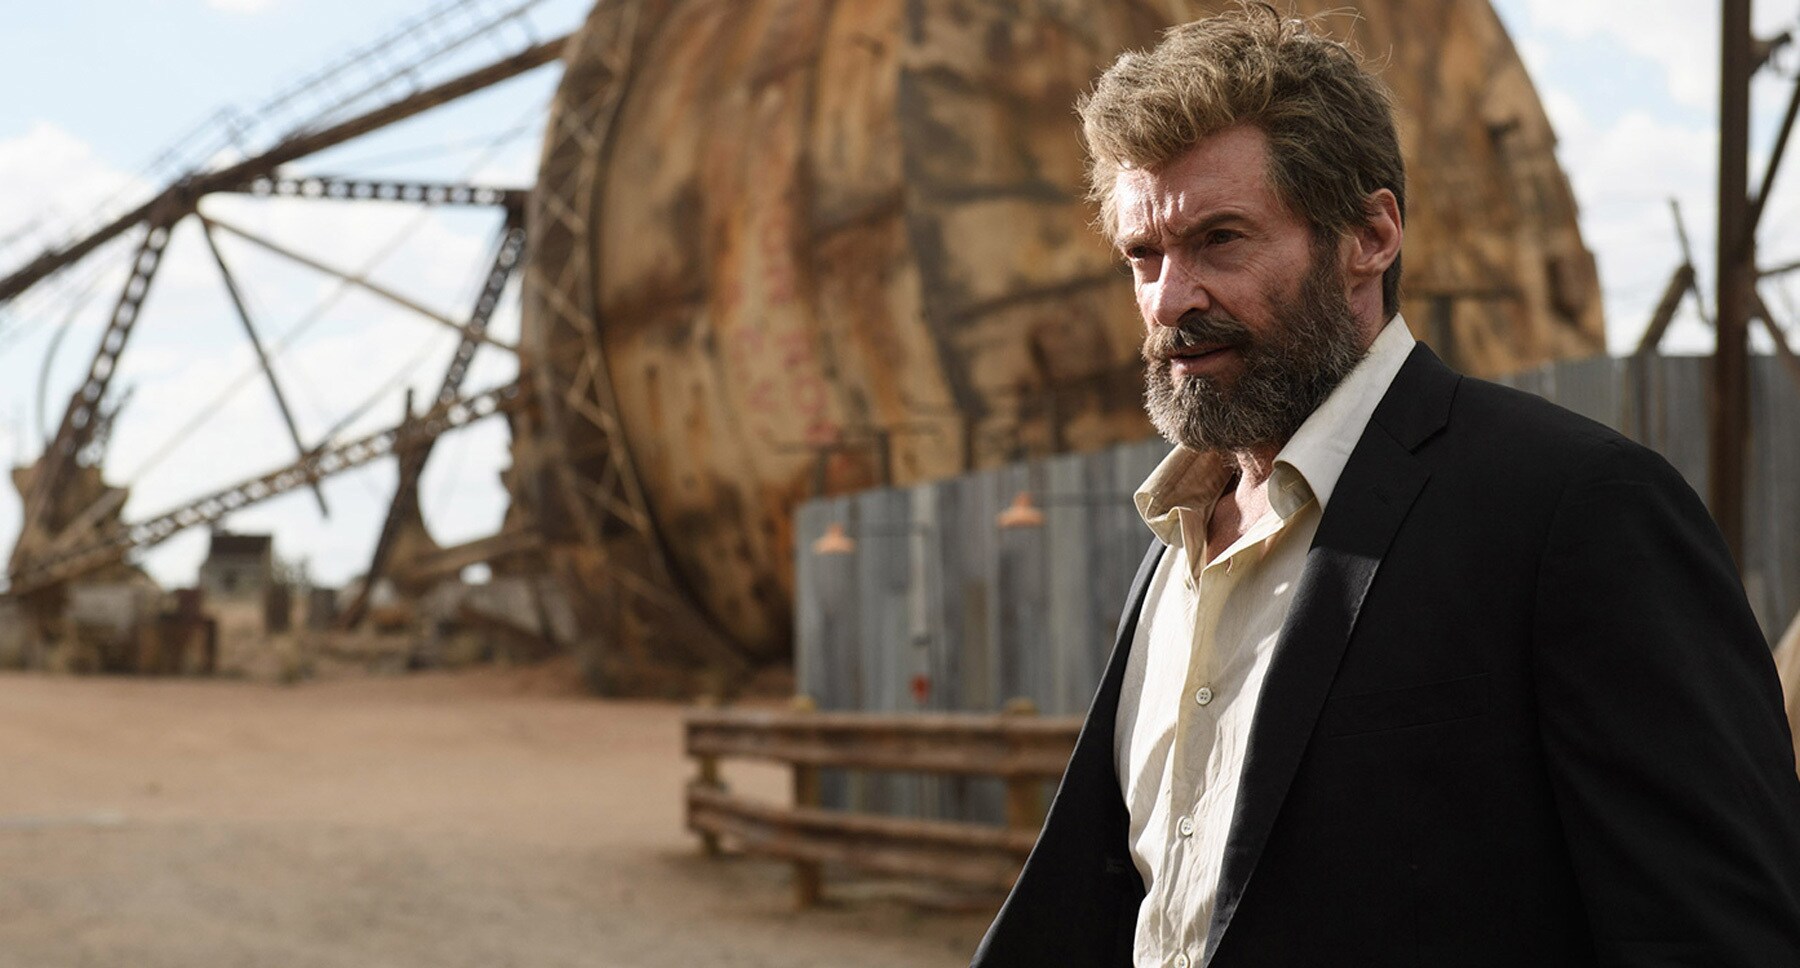 Hugh Jackman (as Logan) in an abandoned area in "Logan"